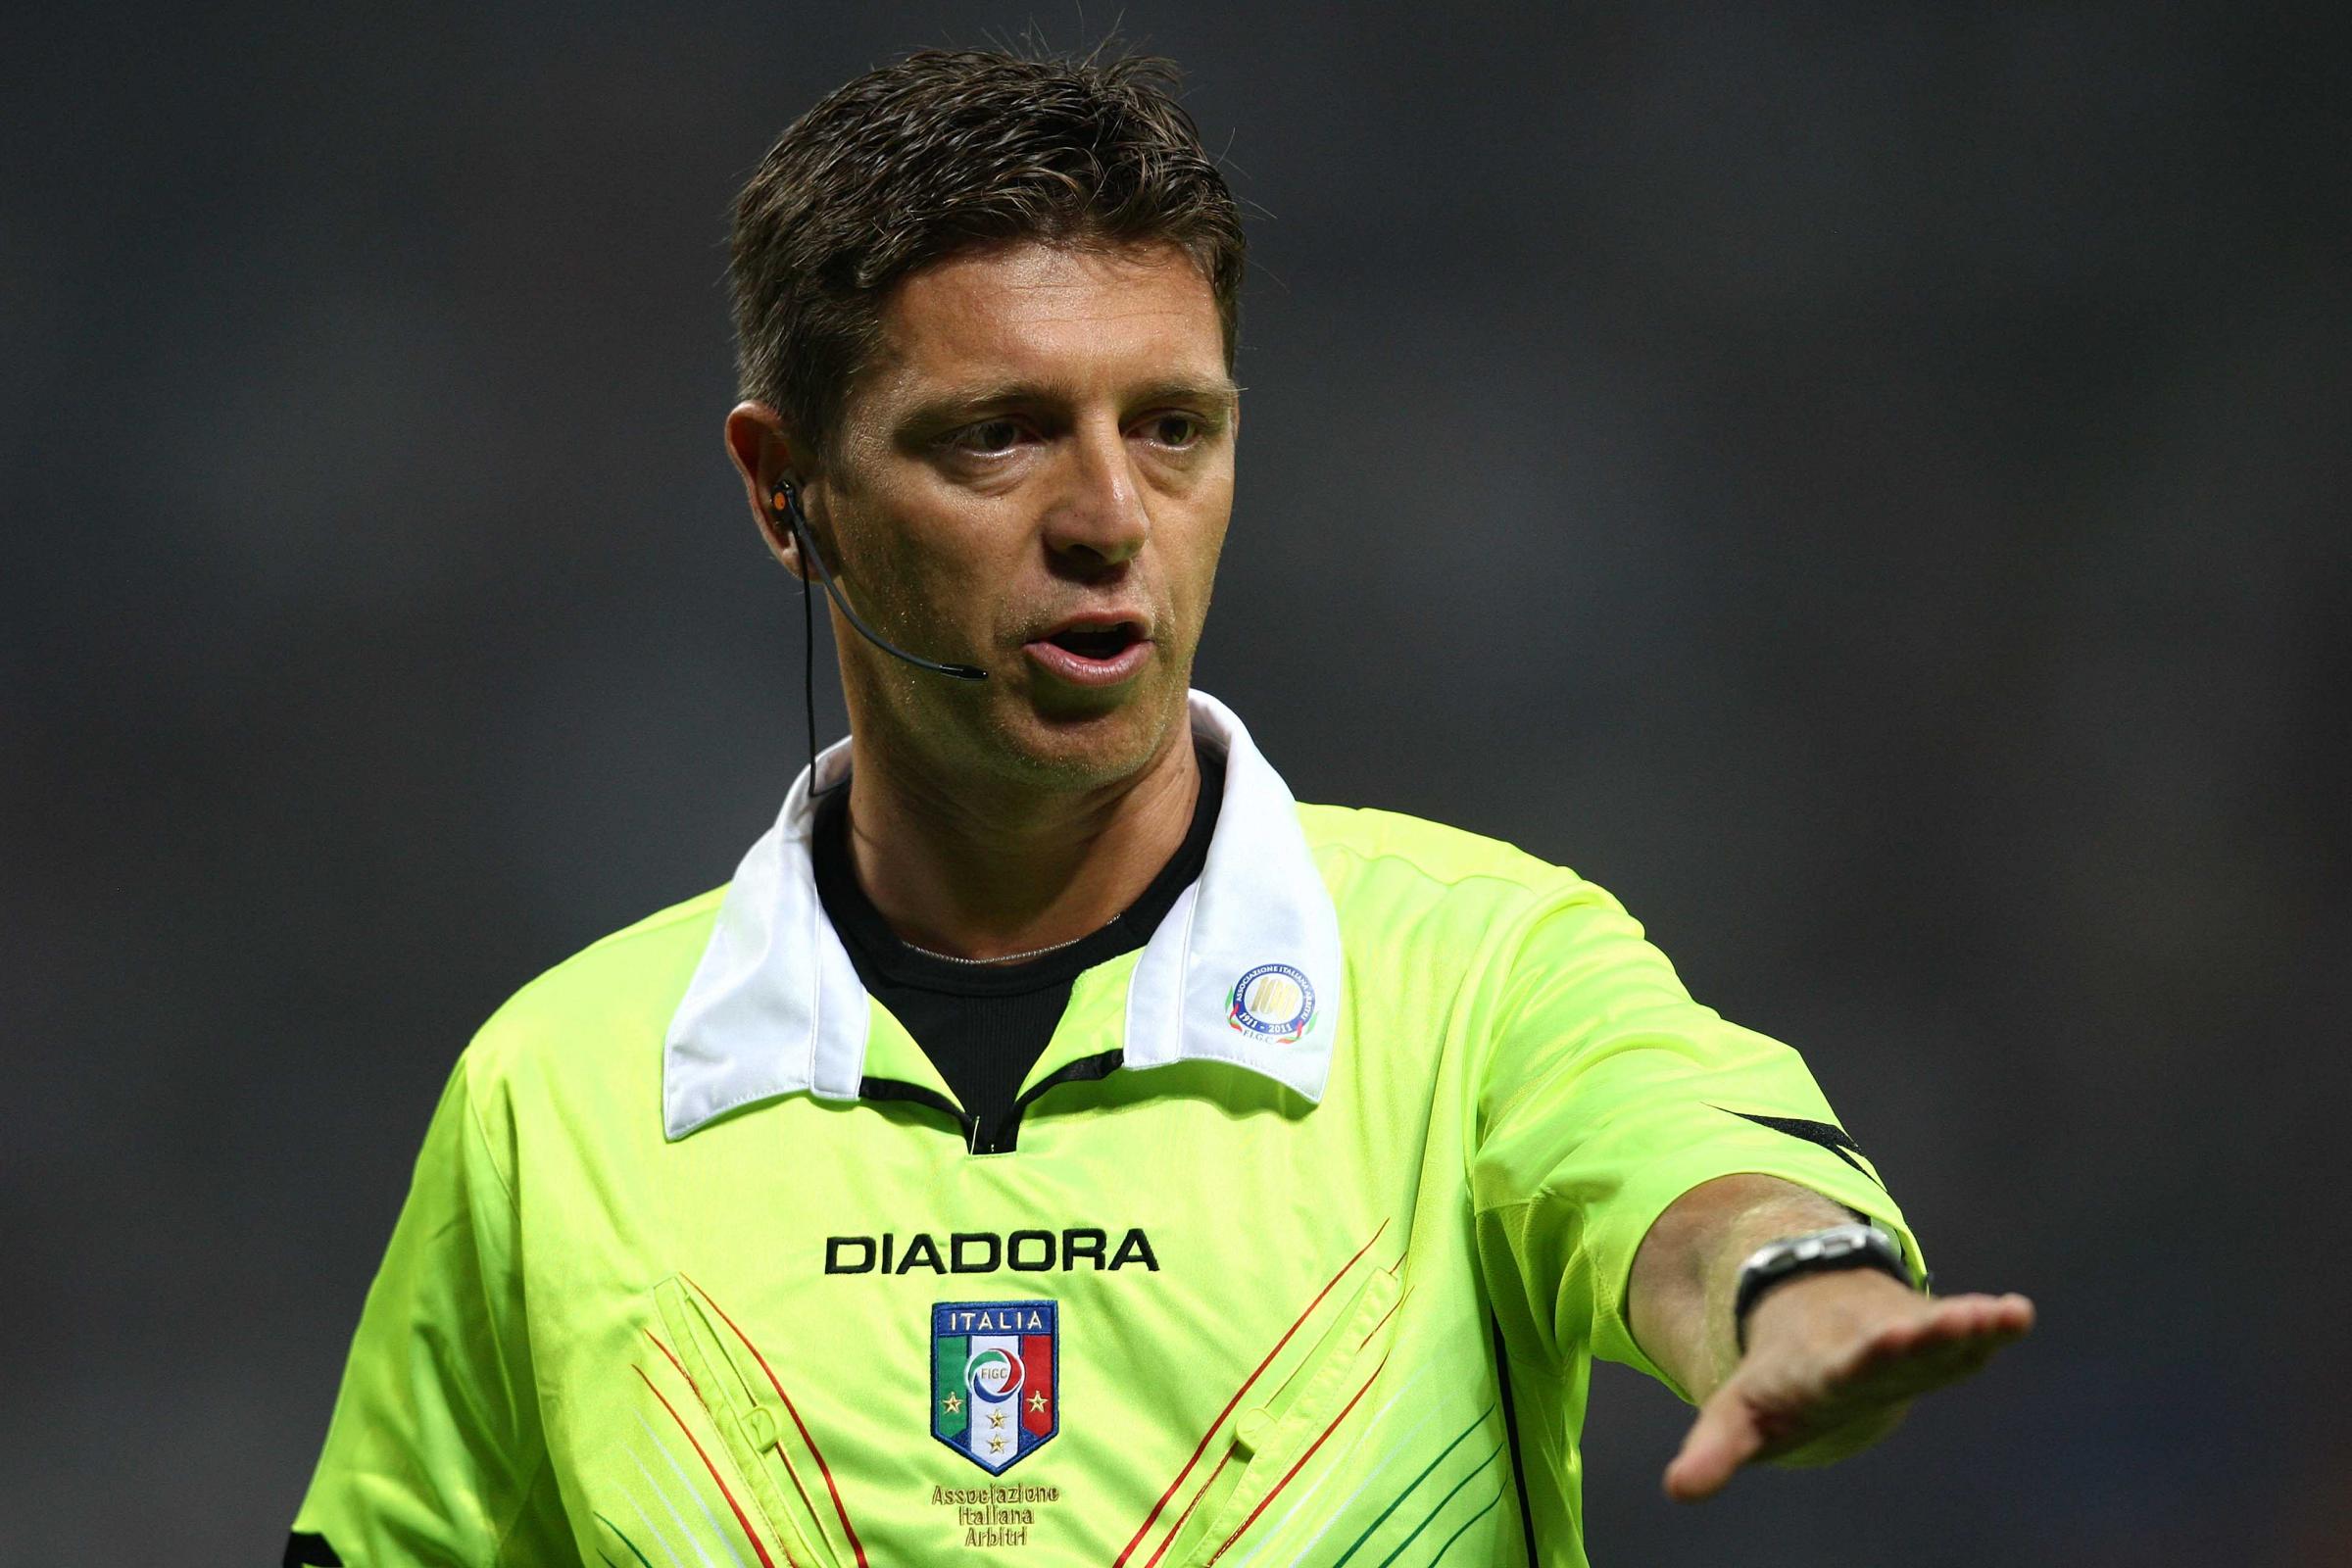 سری آ-هفته هفتم-داوران-دربی ایتالیا-اینتر-یوونتوس-Serie A-Inter-Juve-Derby-derby d'italia-referee